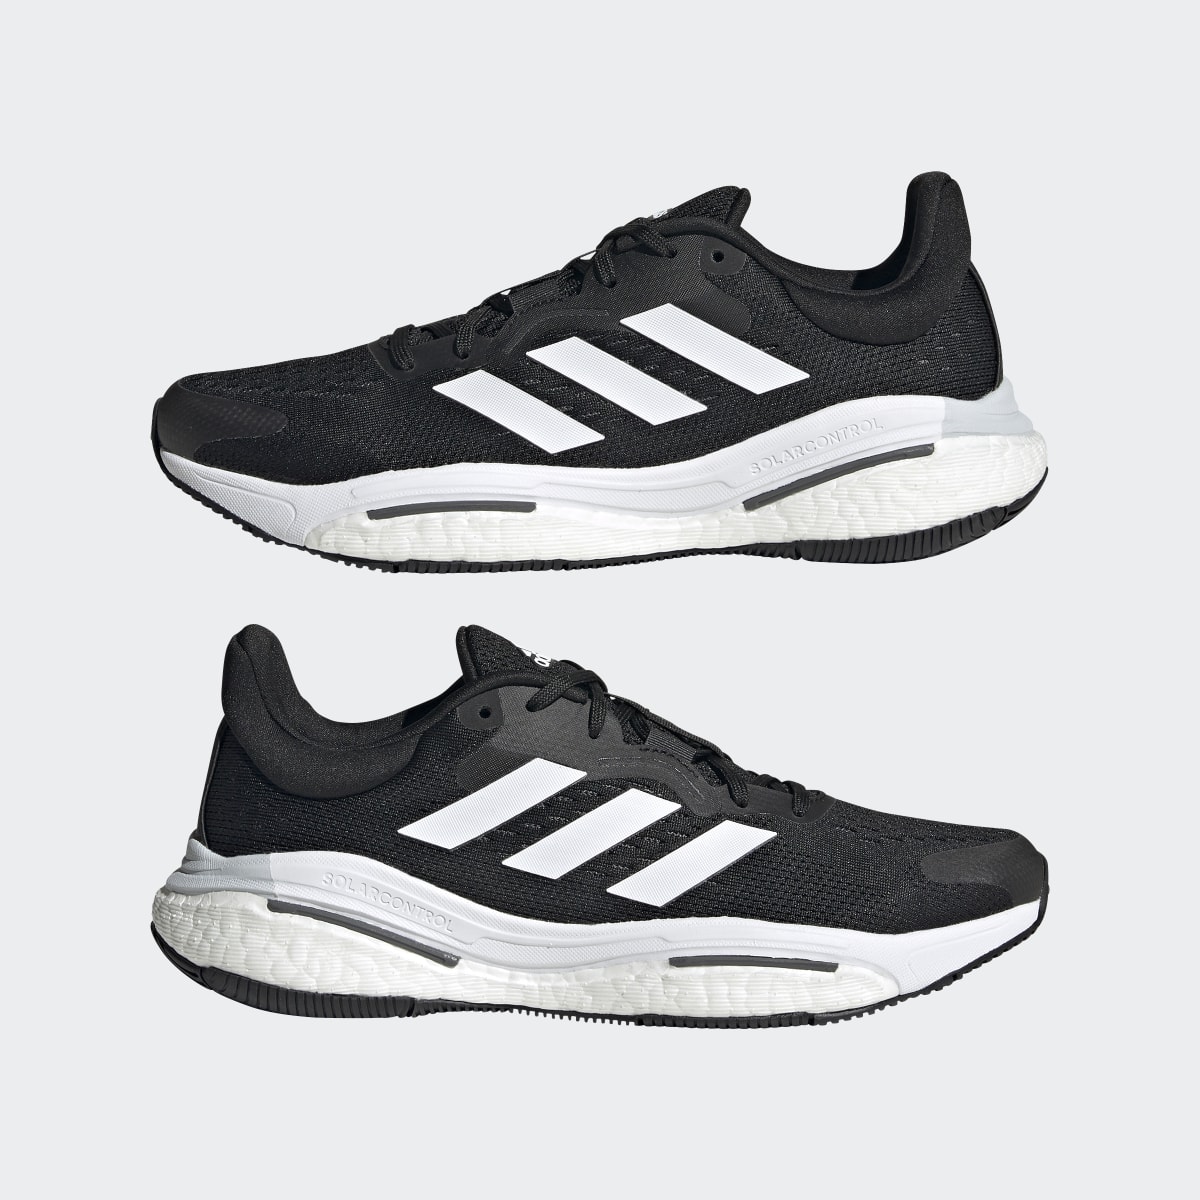 Adidas Solarcontrol Running Shoes. 8